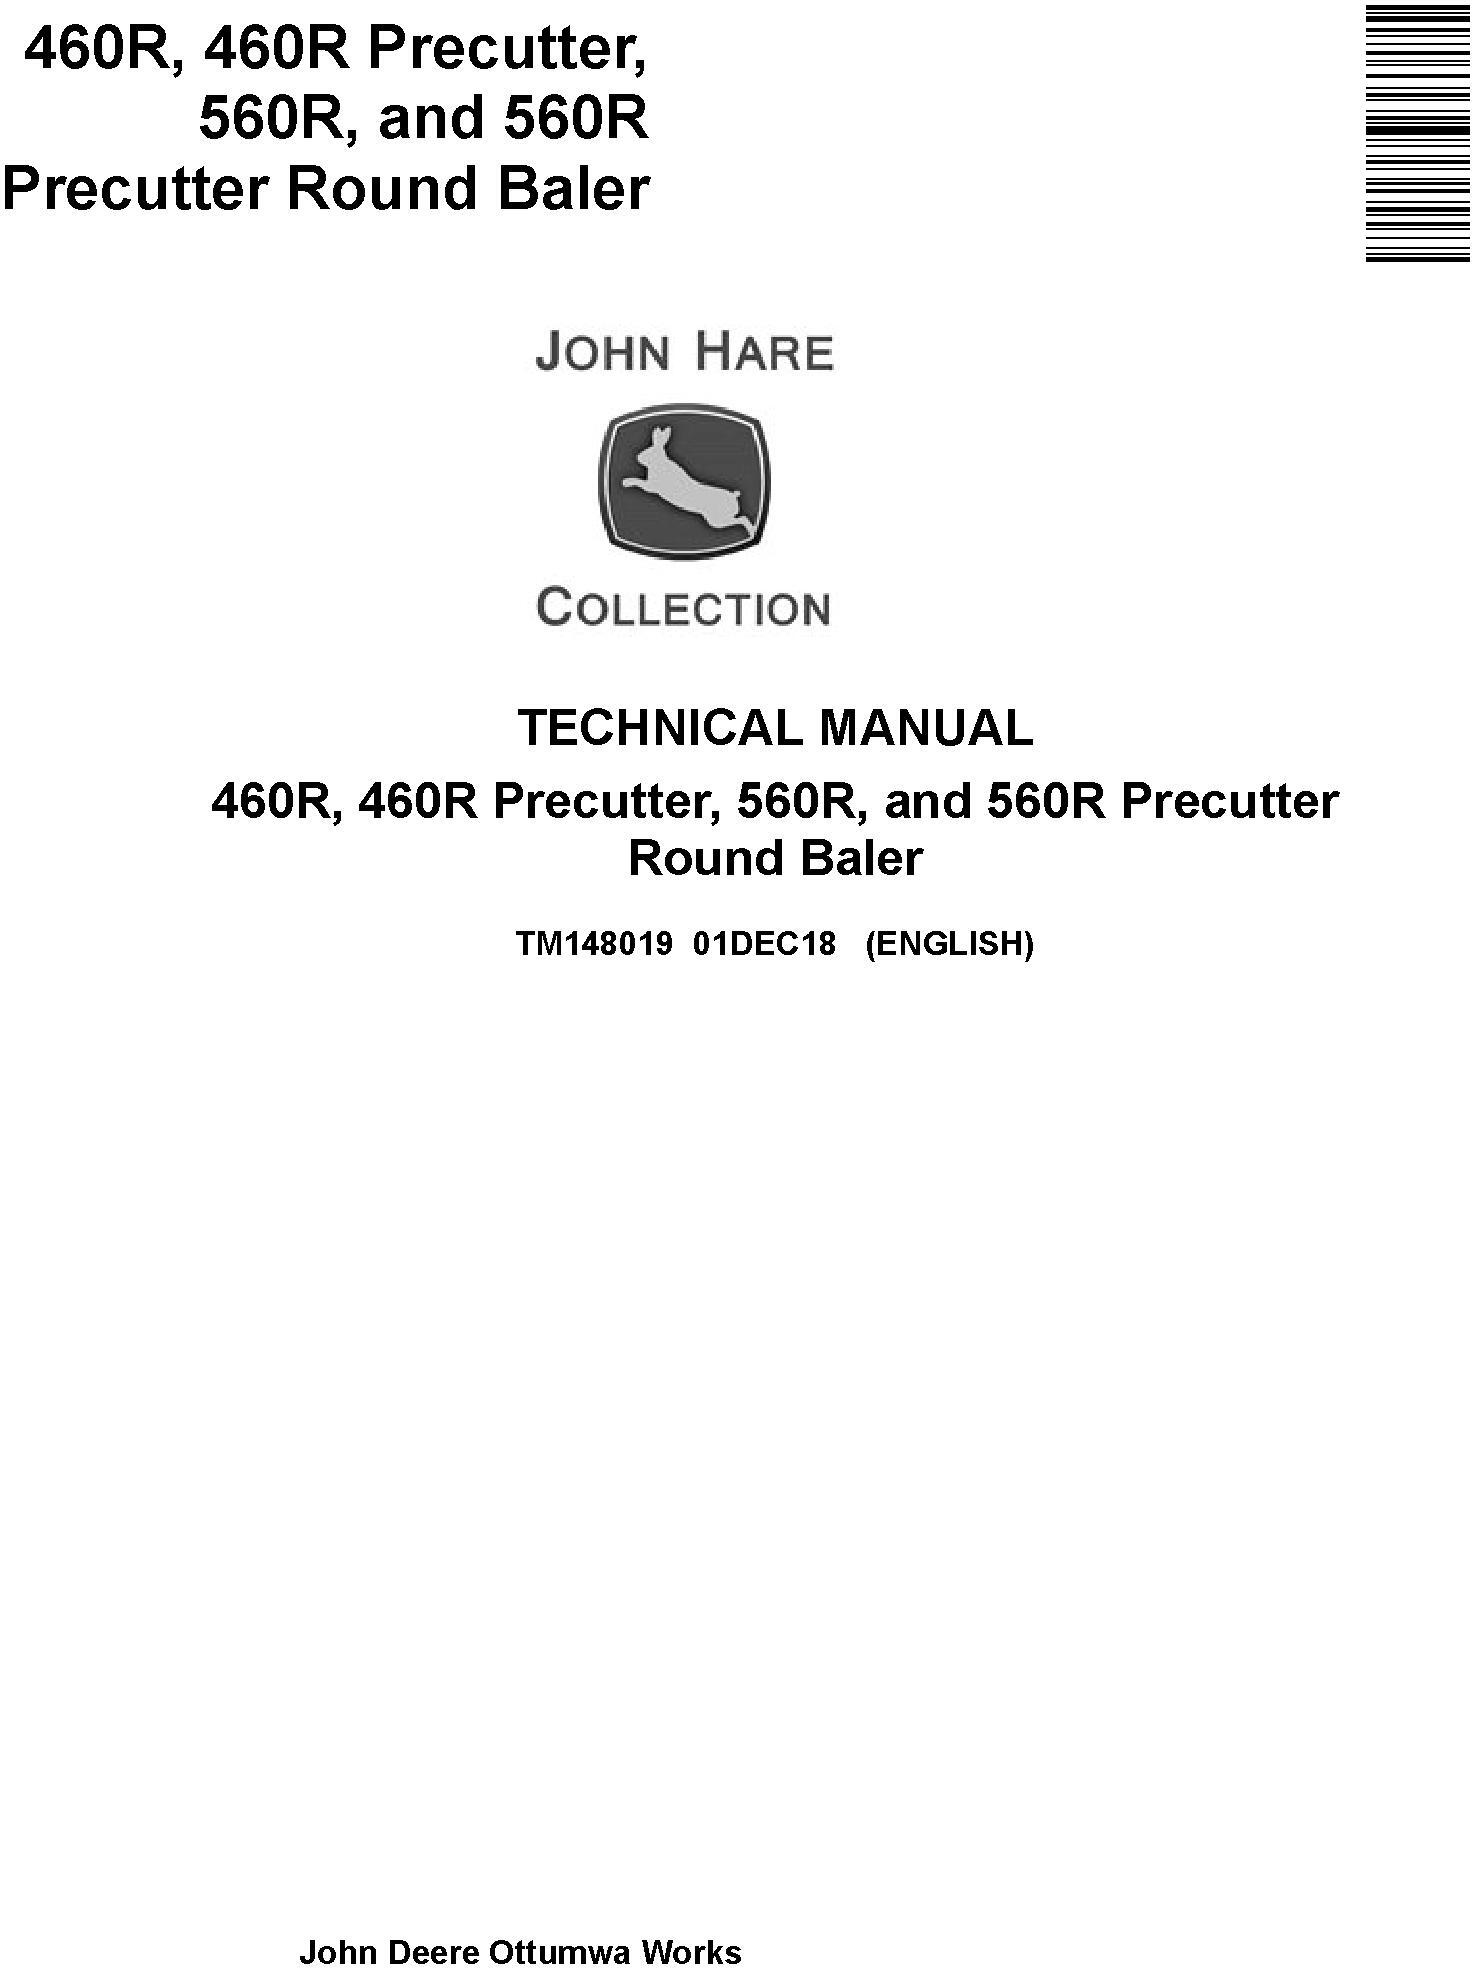 John Deere 460R 560R Precutter Round Baler Technical Manual TM148019